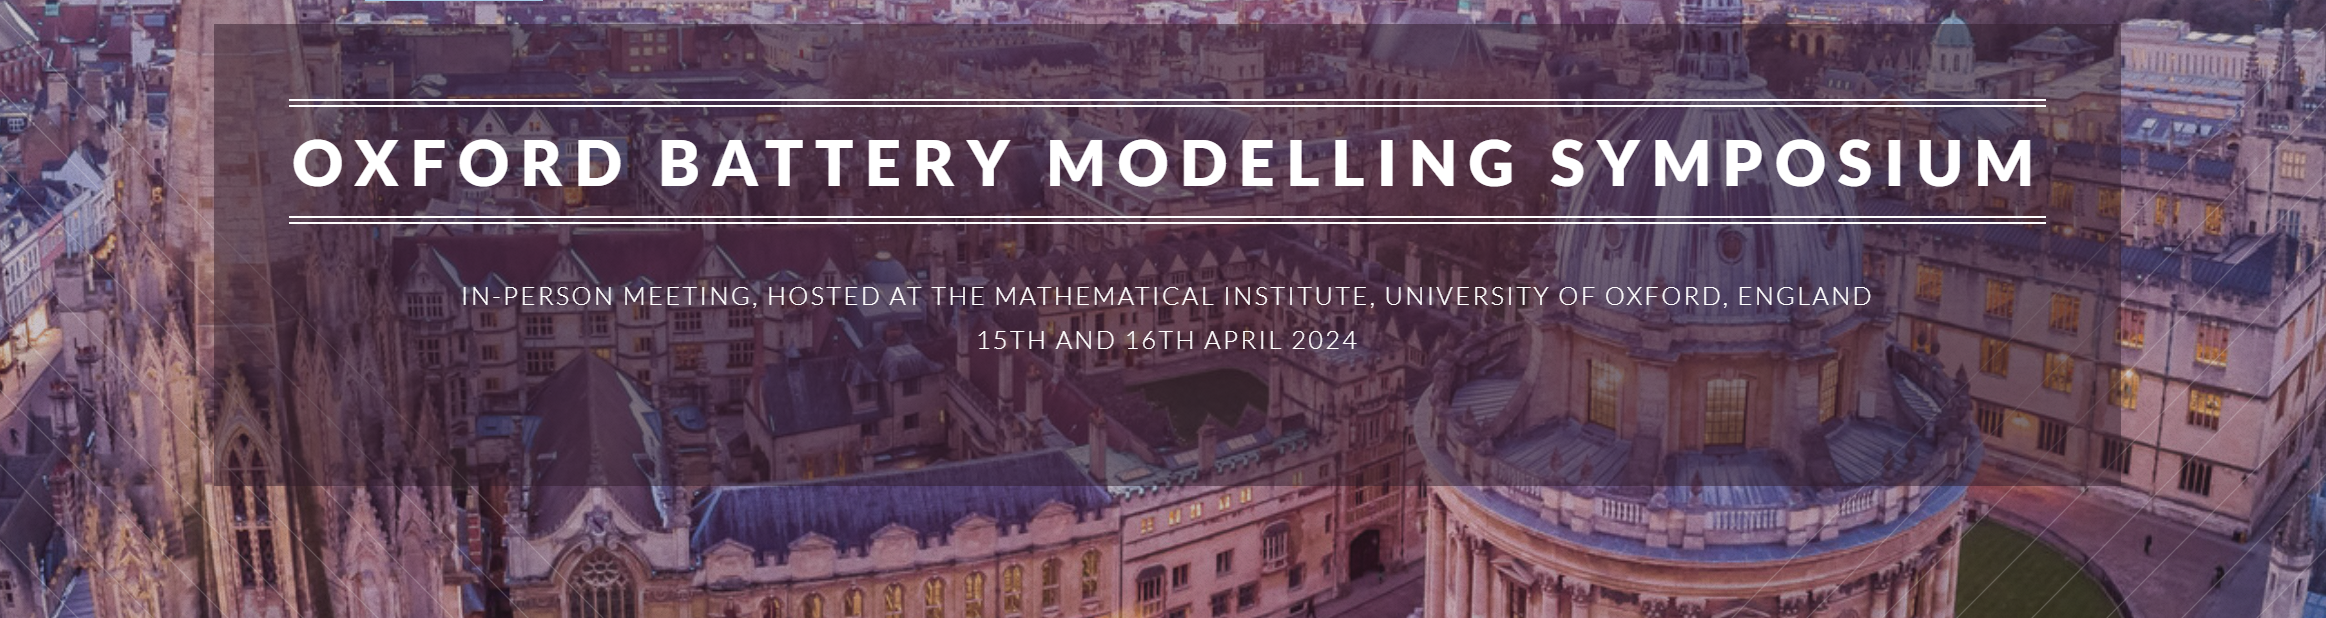 Oxford Battery Modelling Symposium 2024